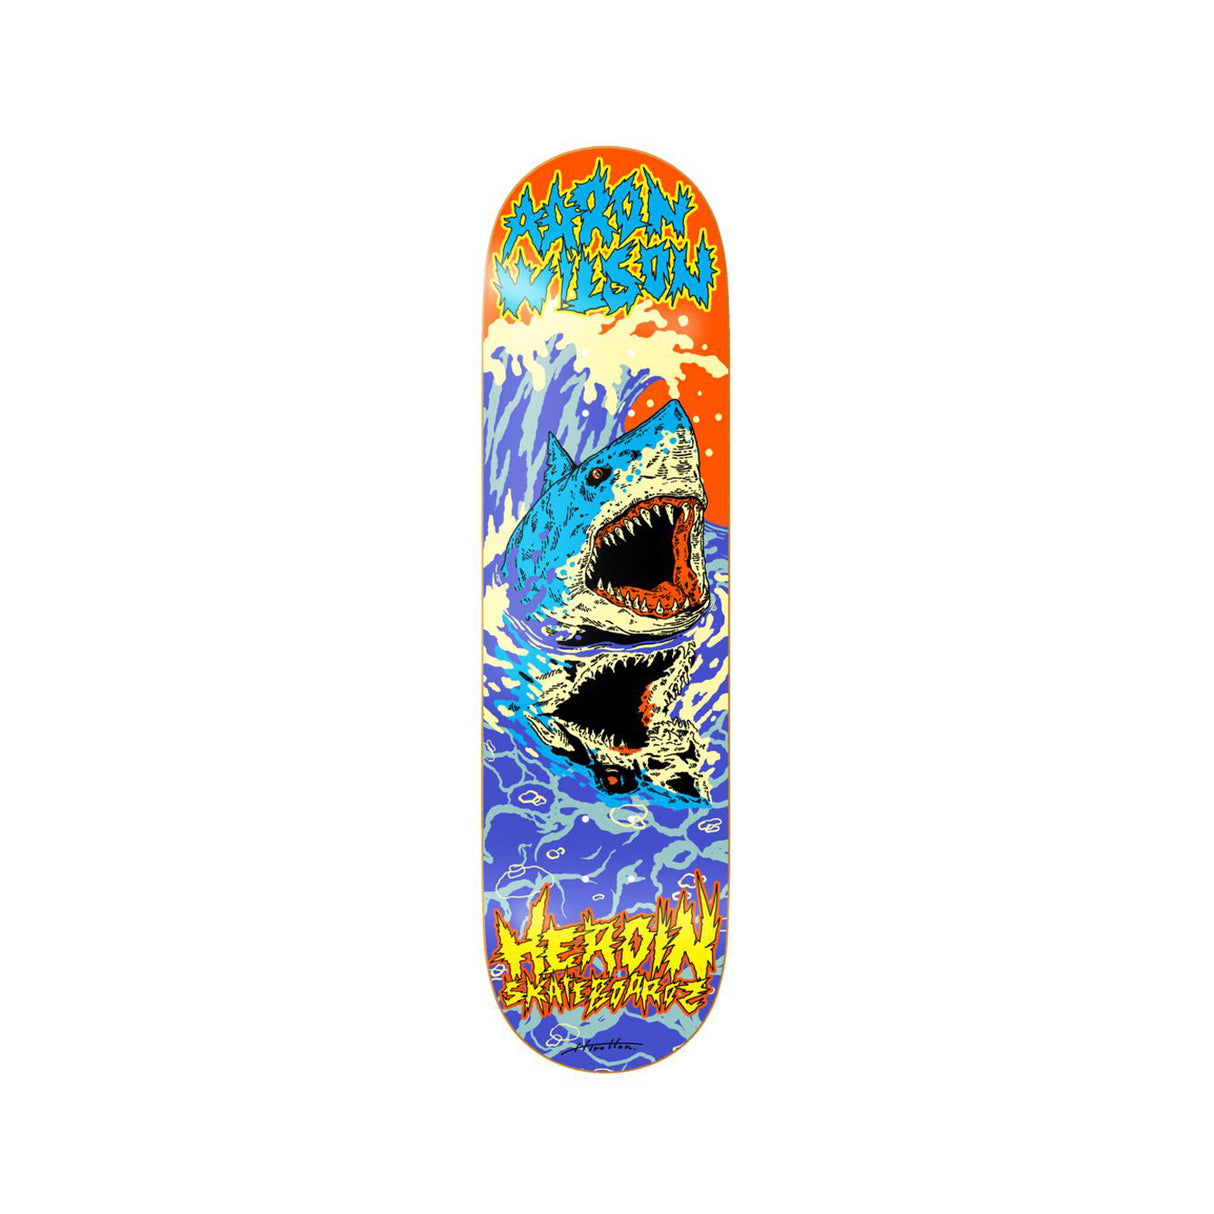 Heroin Skateboards AW Dead Reflections 8.5 x 32 Deck w/ Pepper Grip